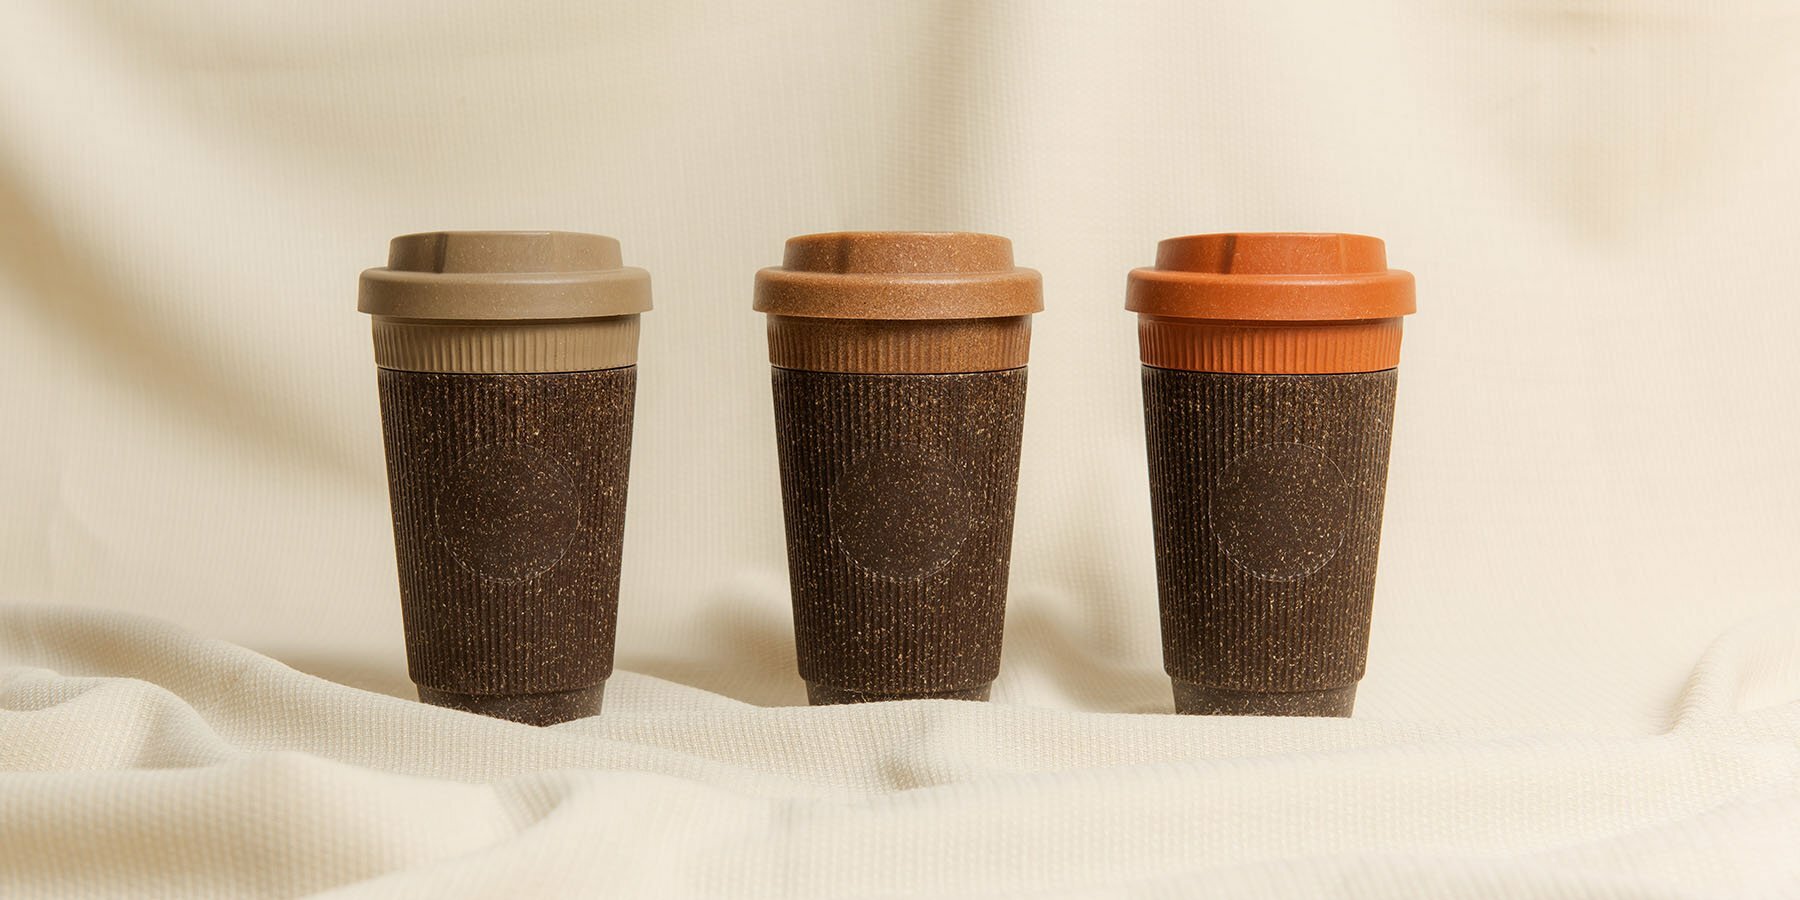 Kaffeeform: A Coffee Cup Made From Coffee Grounds